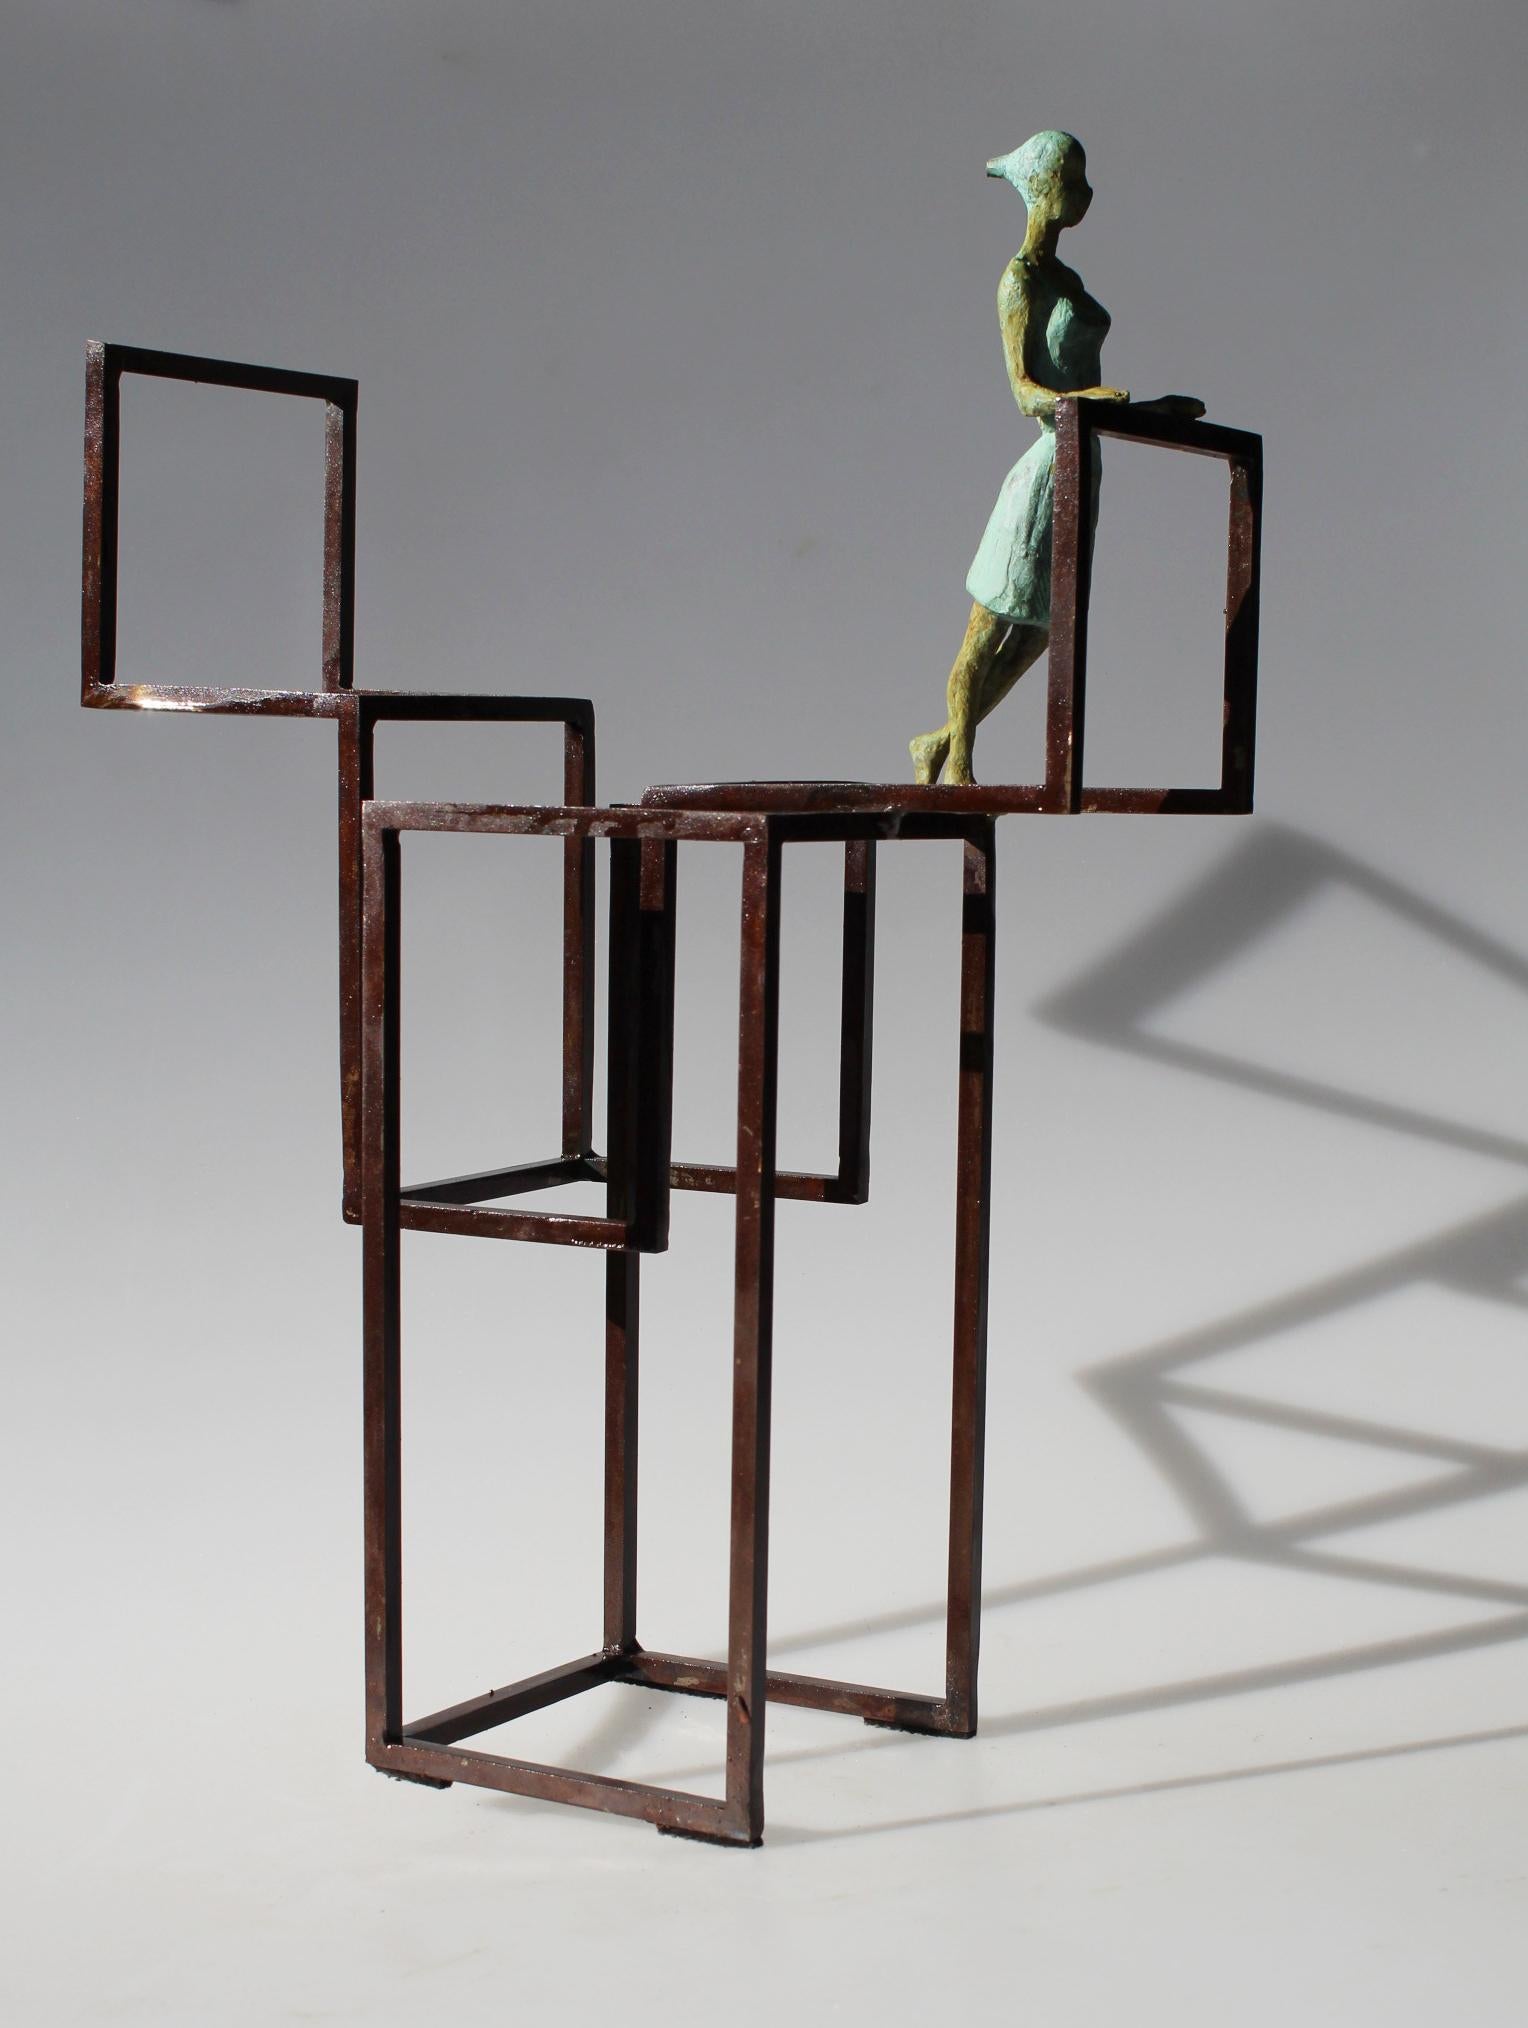 Joan Artigas Planas Figurative Sculpture - "Viewpoint" contemporary bronze table, mural sculpture figurative girl 